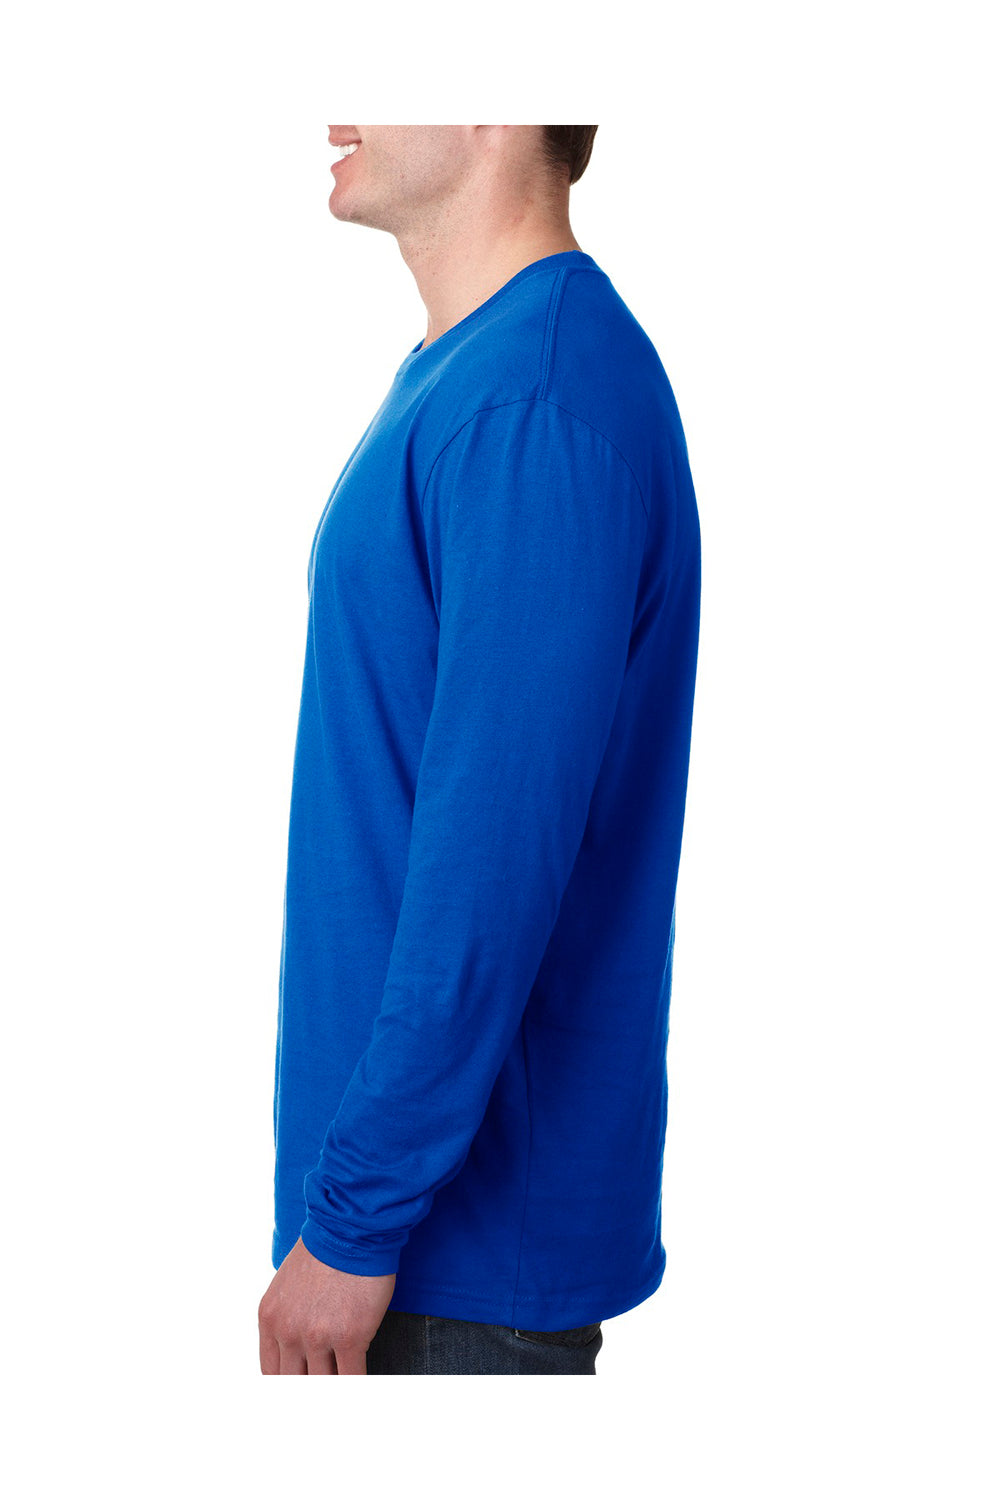 Next Level N3601 Mens Fine Jersey Long Sleeve Crewneck T-Shirt Royal Blue Side